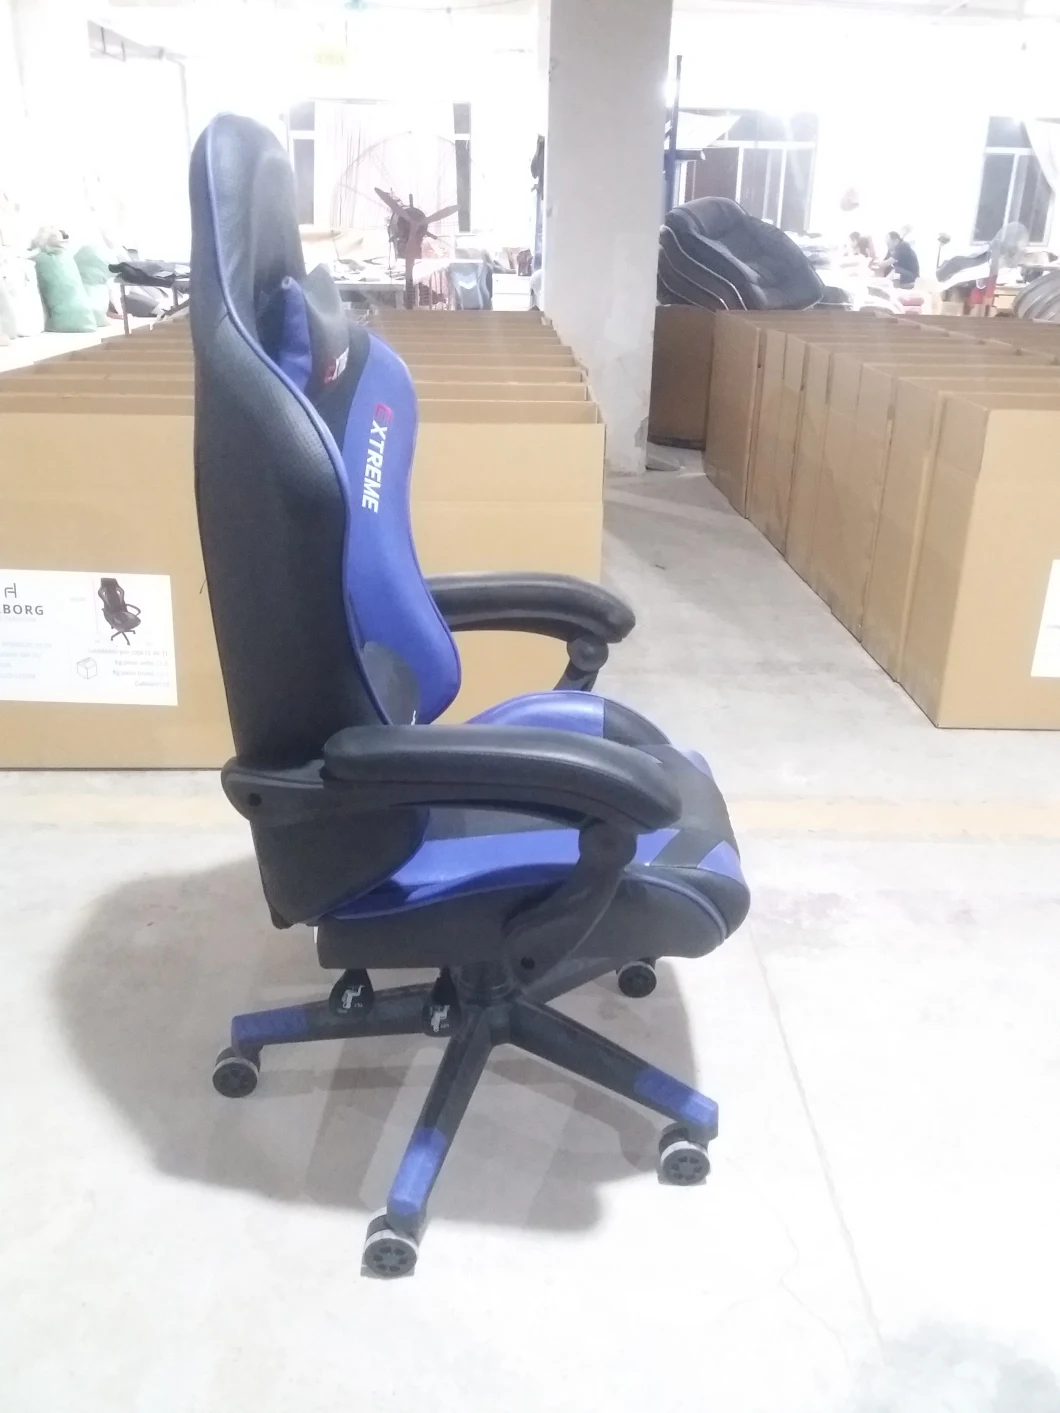 Ergonomic PU Leatehr Gaming Chair Colorful Office Chair Style Racing Chairs Office Chair